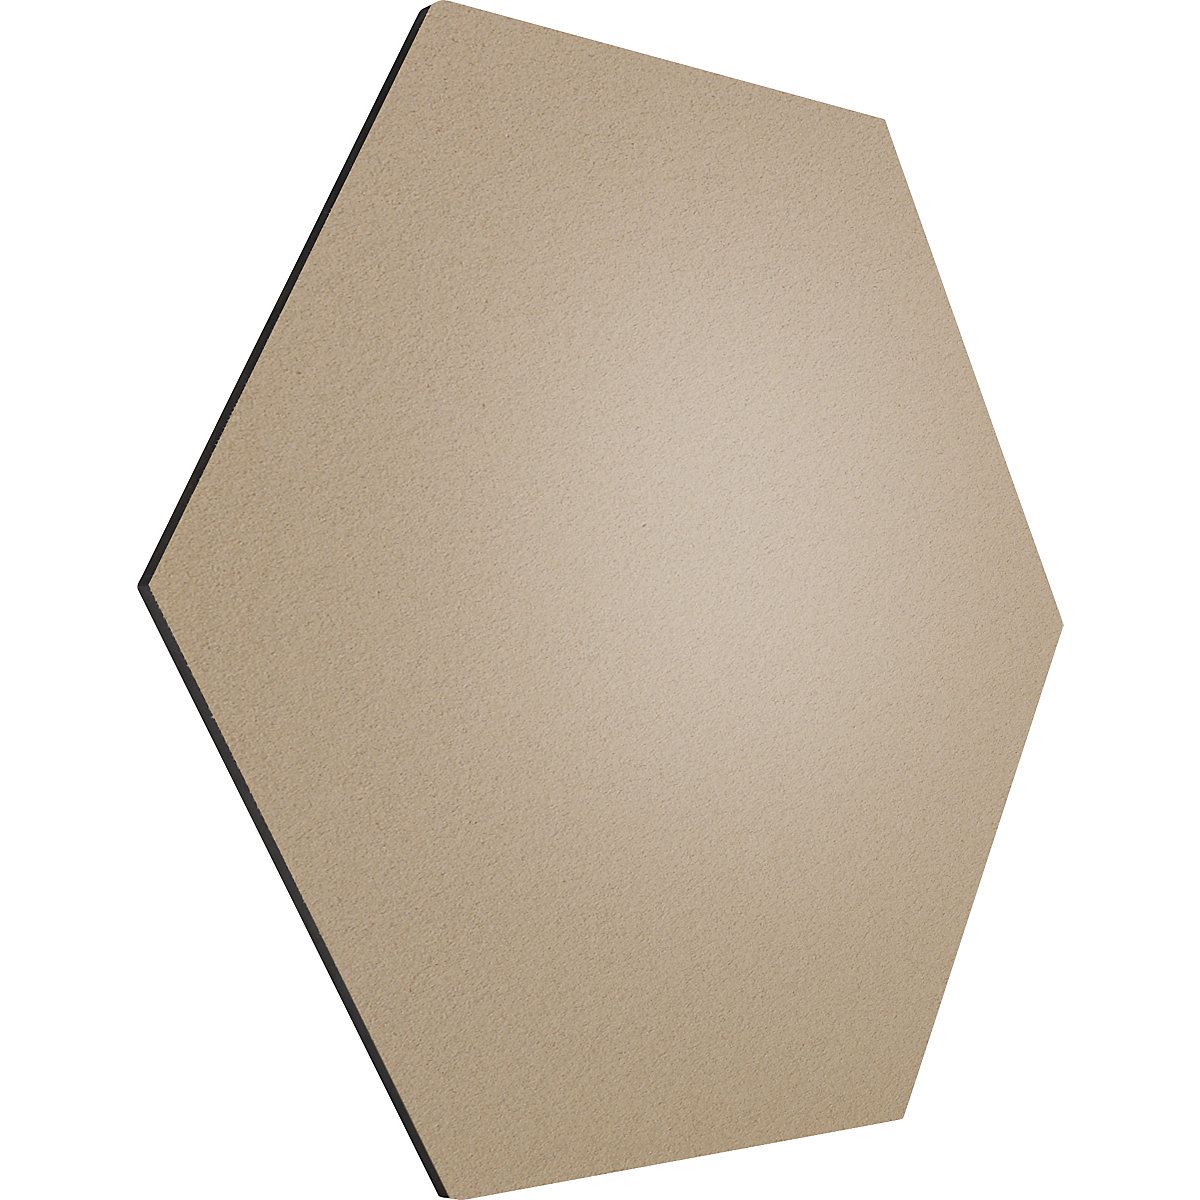 Design prikbord zeshoekig – Chameleon, kurk, b x h = 600 x 600 mm, beige-34